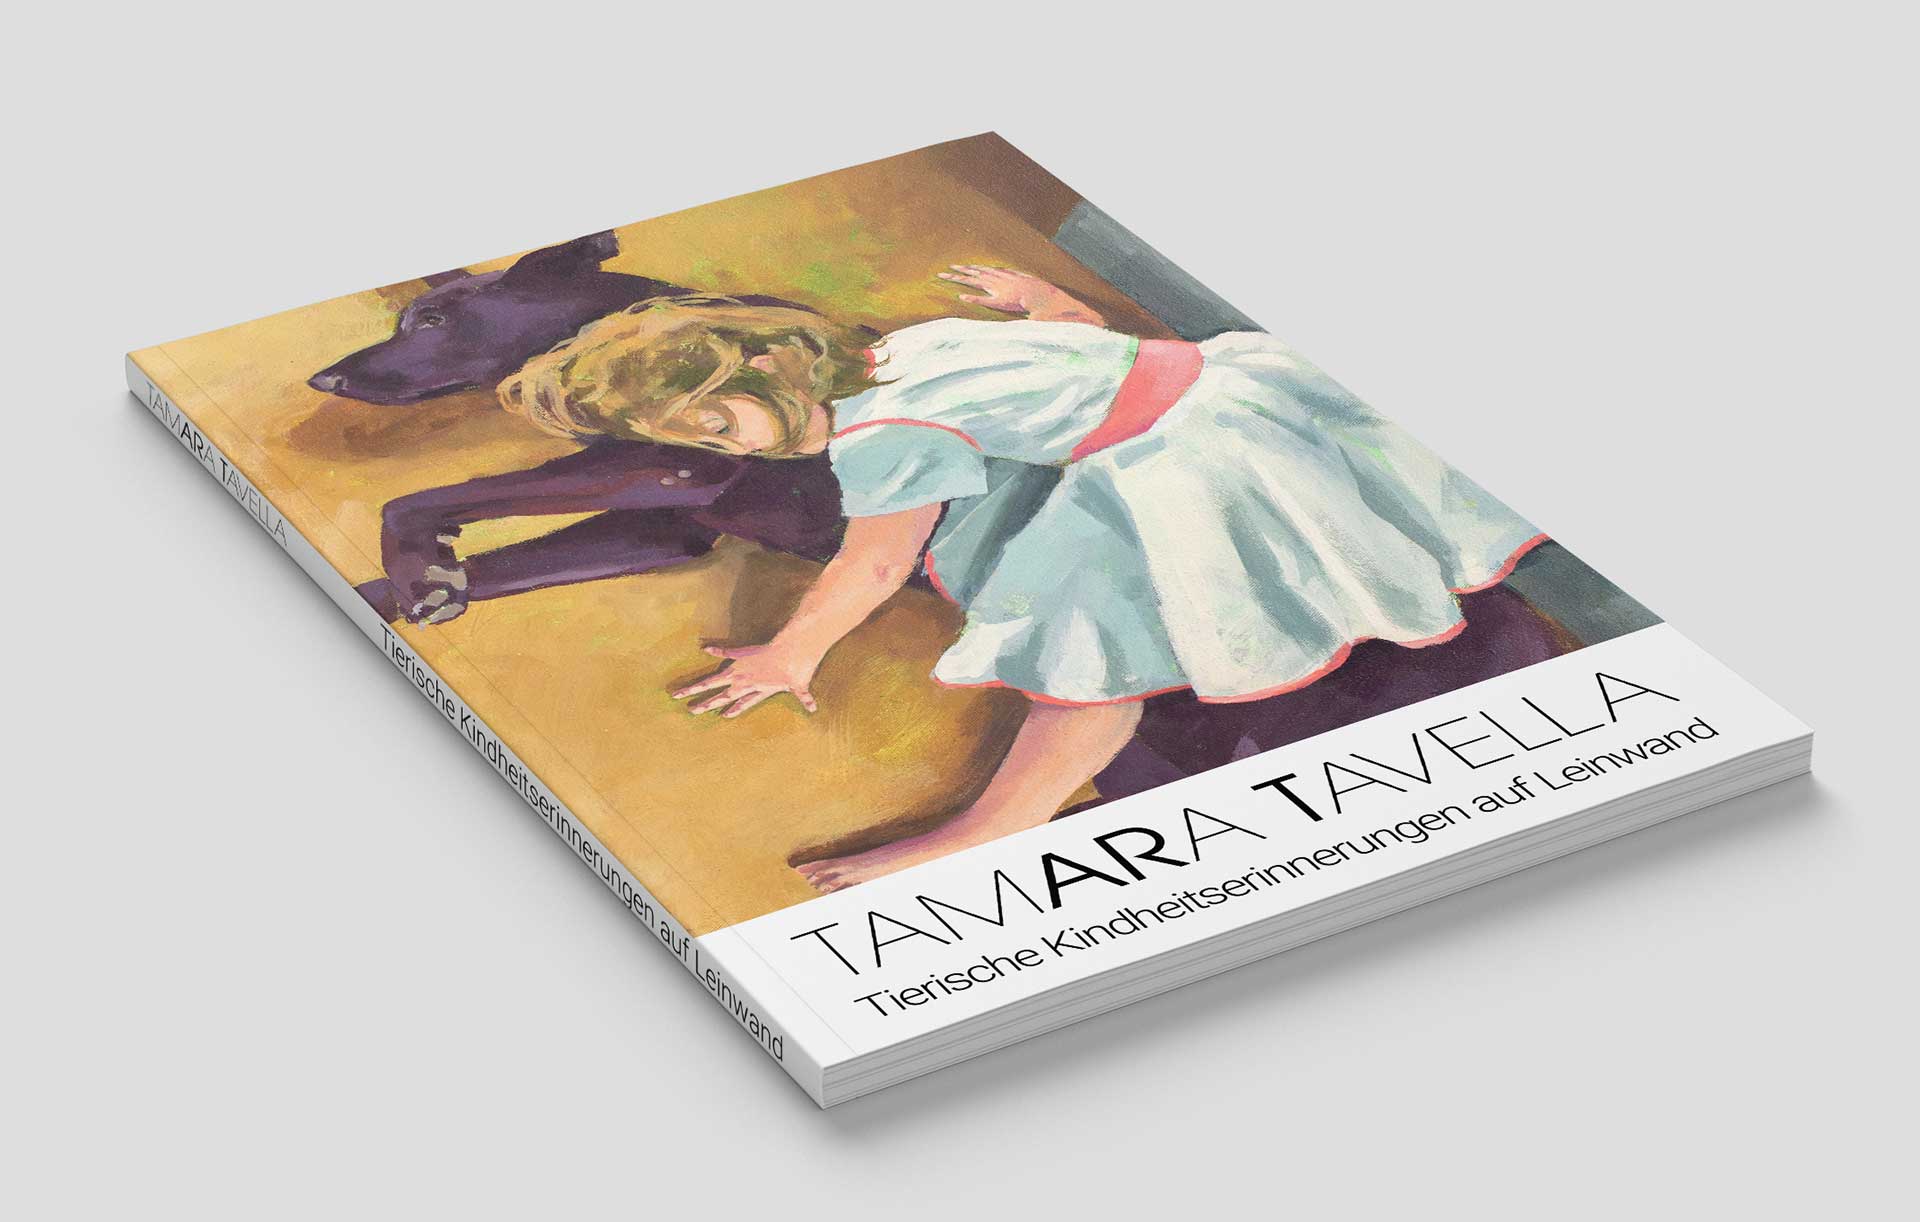 Tamara-Tavella-Art-Kunst-Kuenstlerin-Suedtirol-Tiere-Kinder-Kunstwerke-Artbook